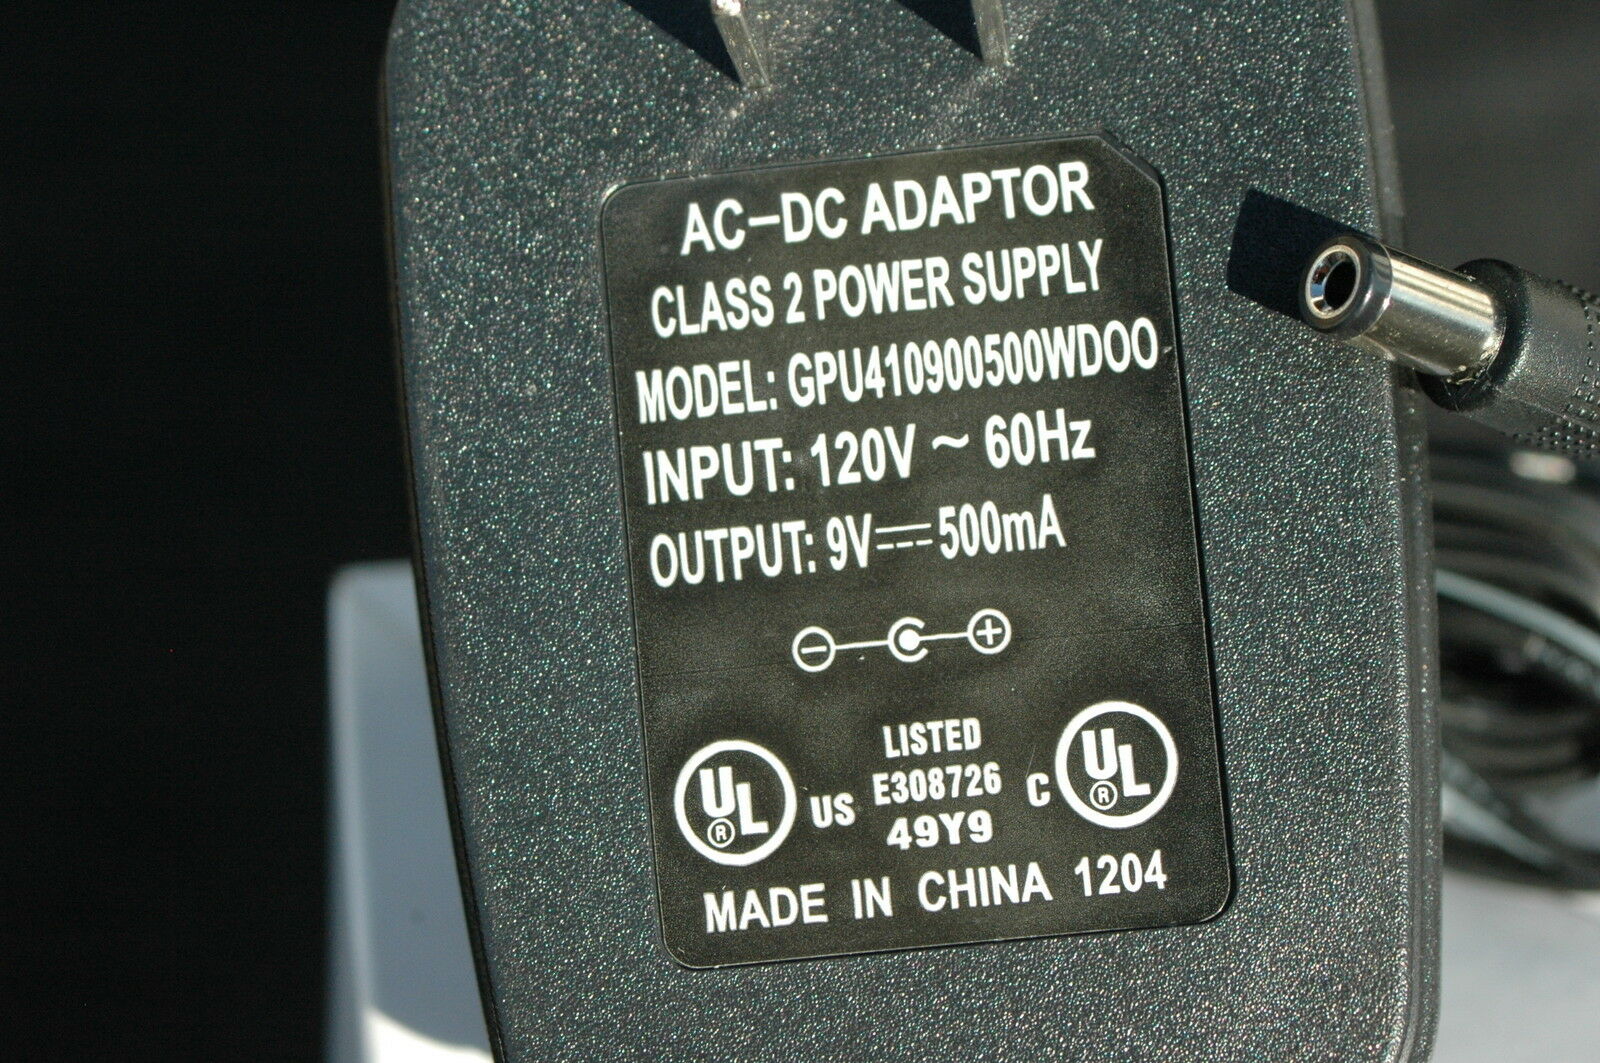 New 9V 500mA GPU410900500WD00 Class 2 Transformer Power Supply Ac Adapter